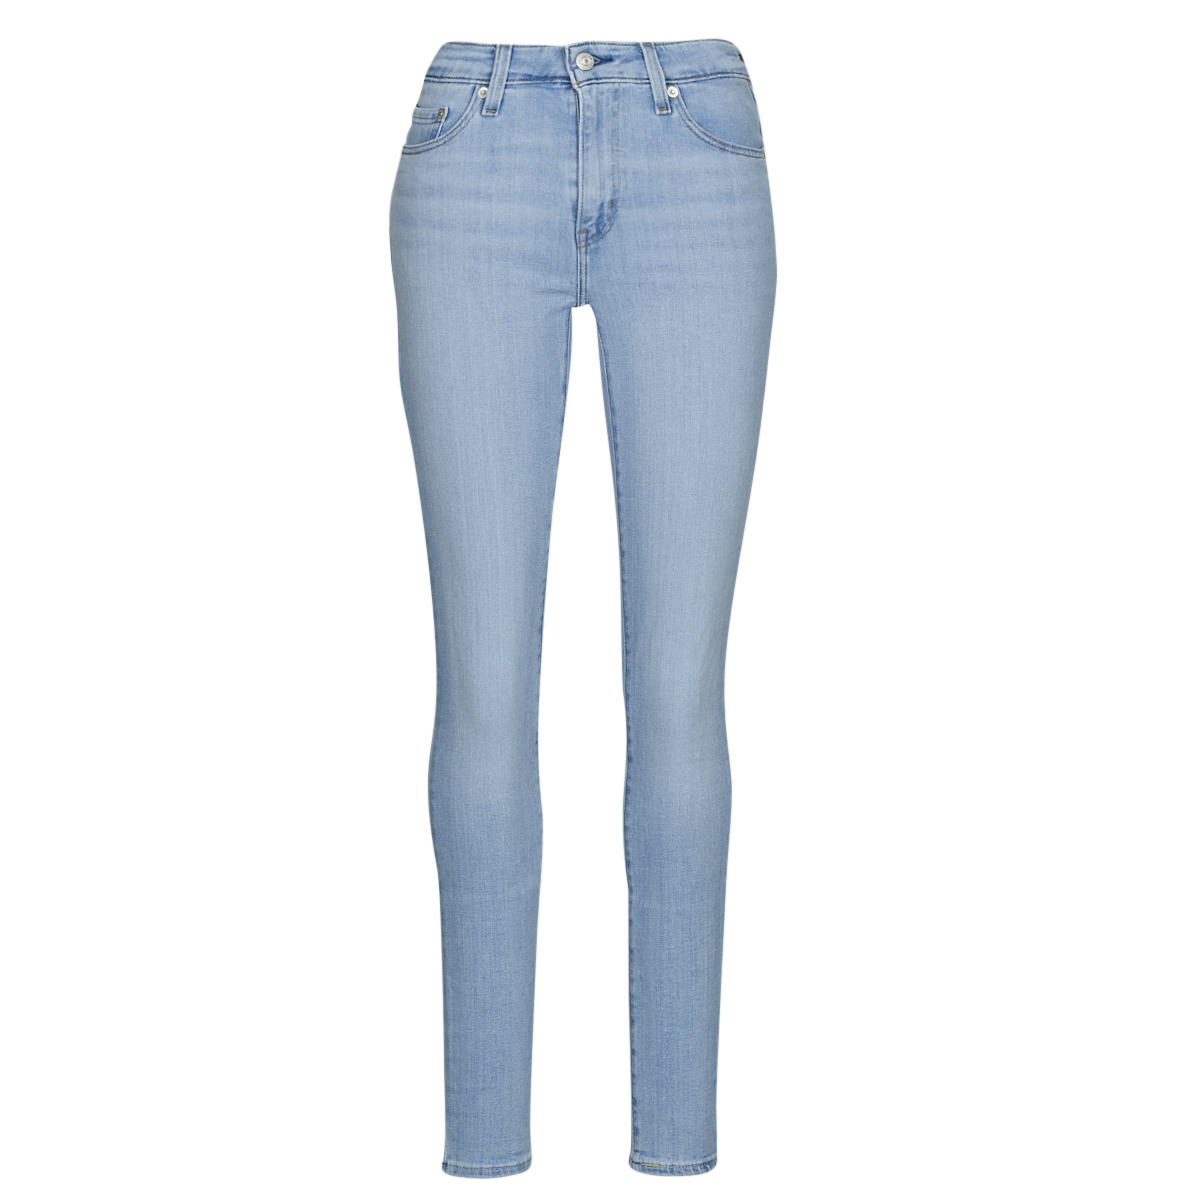 Skinny Jeans Levis  721 HIGH RISE SKINNY